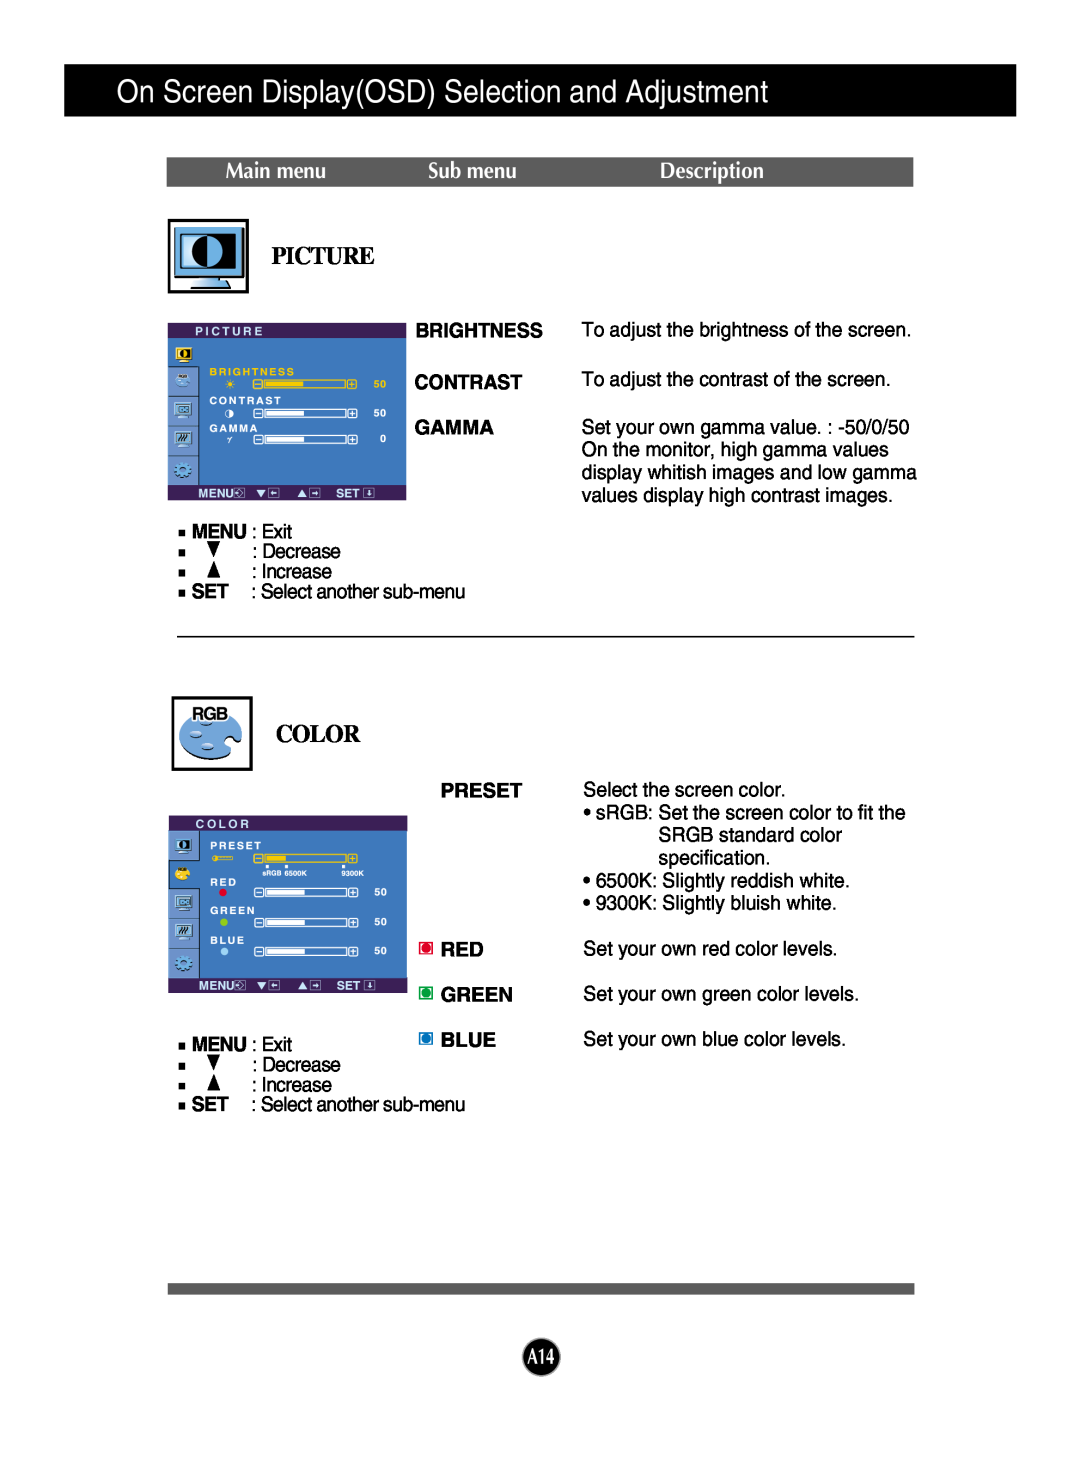 LG Electronics W2600HP Picture, Color, Main menu, Sub menu, Description, On Screen DisplayOSD Selection and Adjustment 